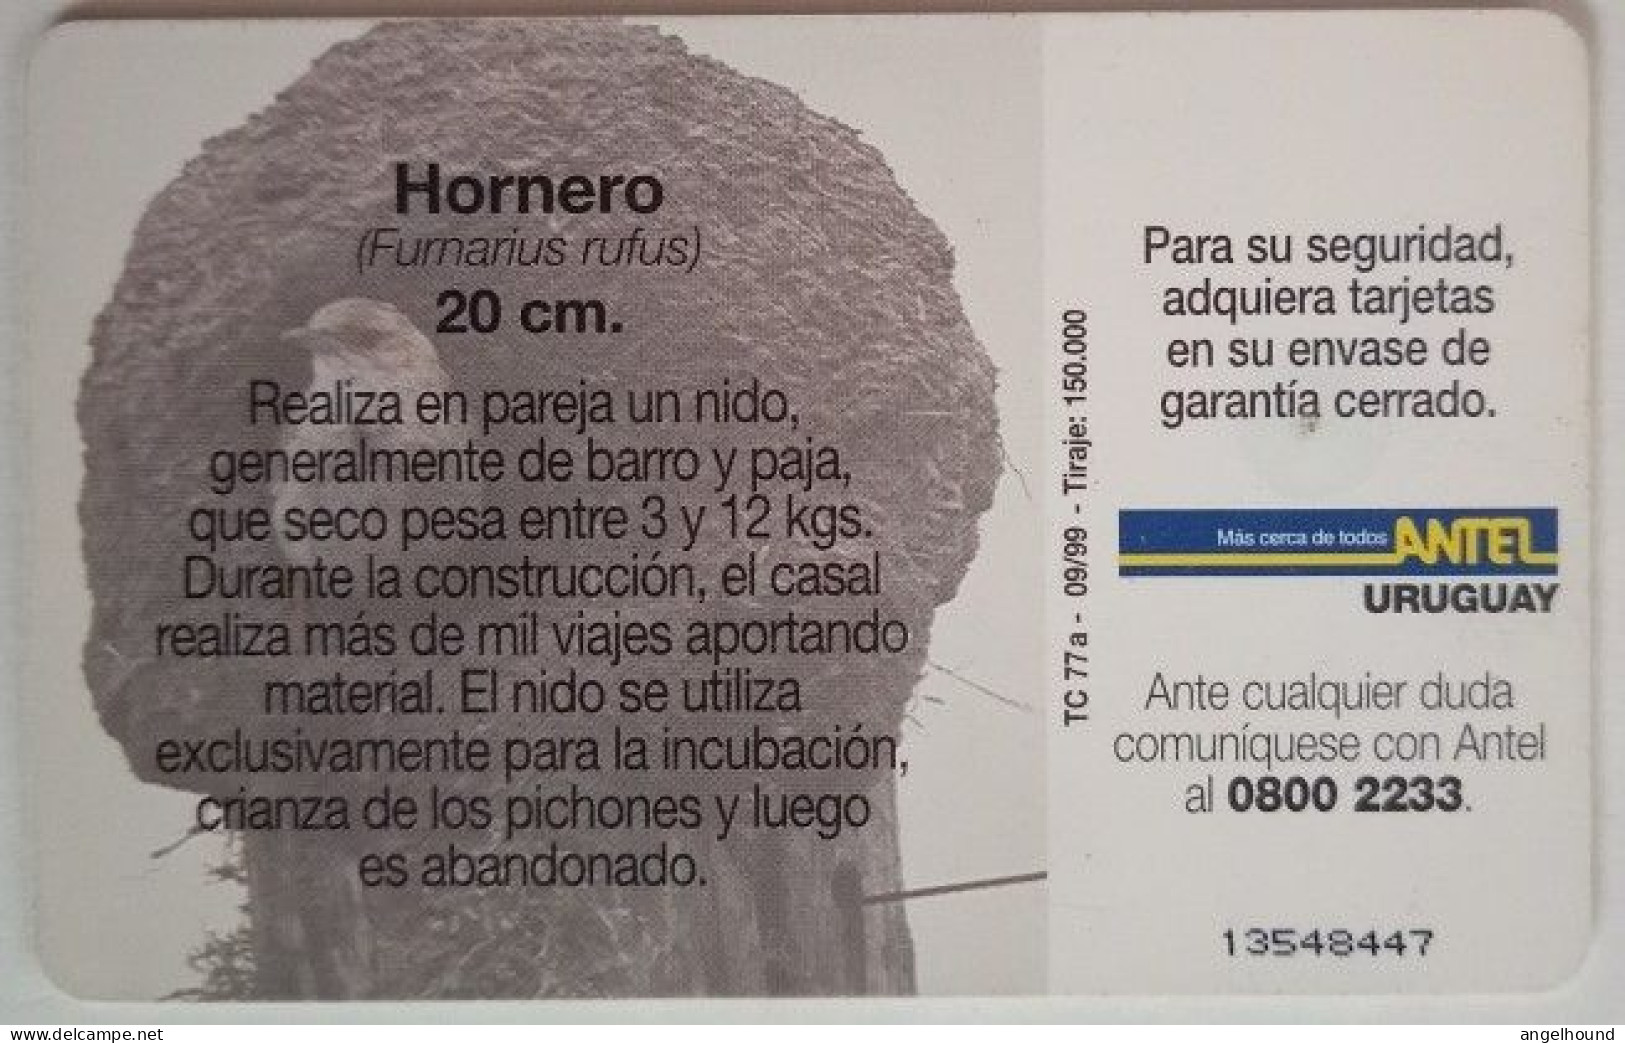 Uruguay Antel $5 Chip Card - Hornero - Uruguay